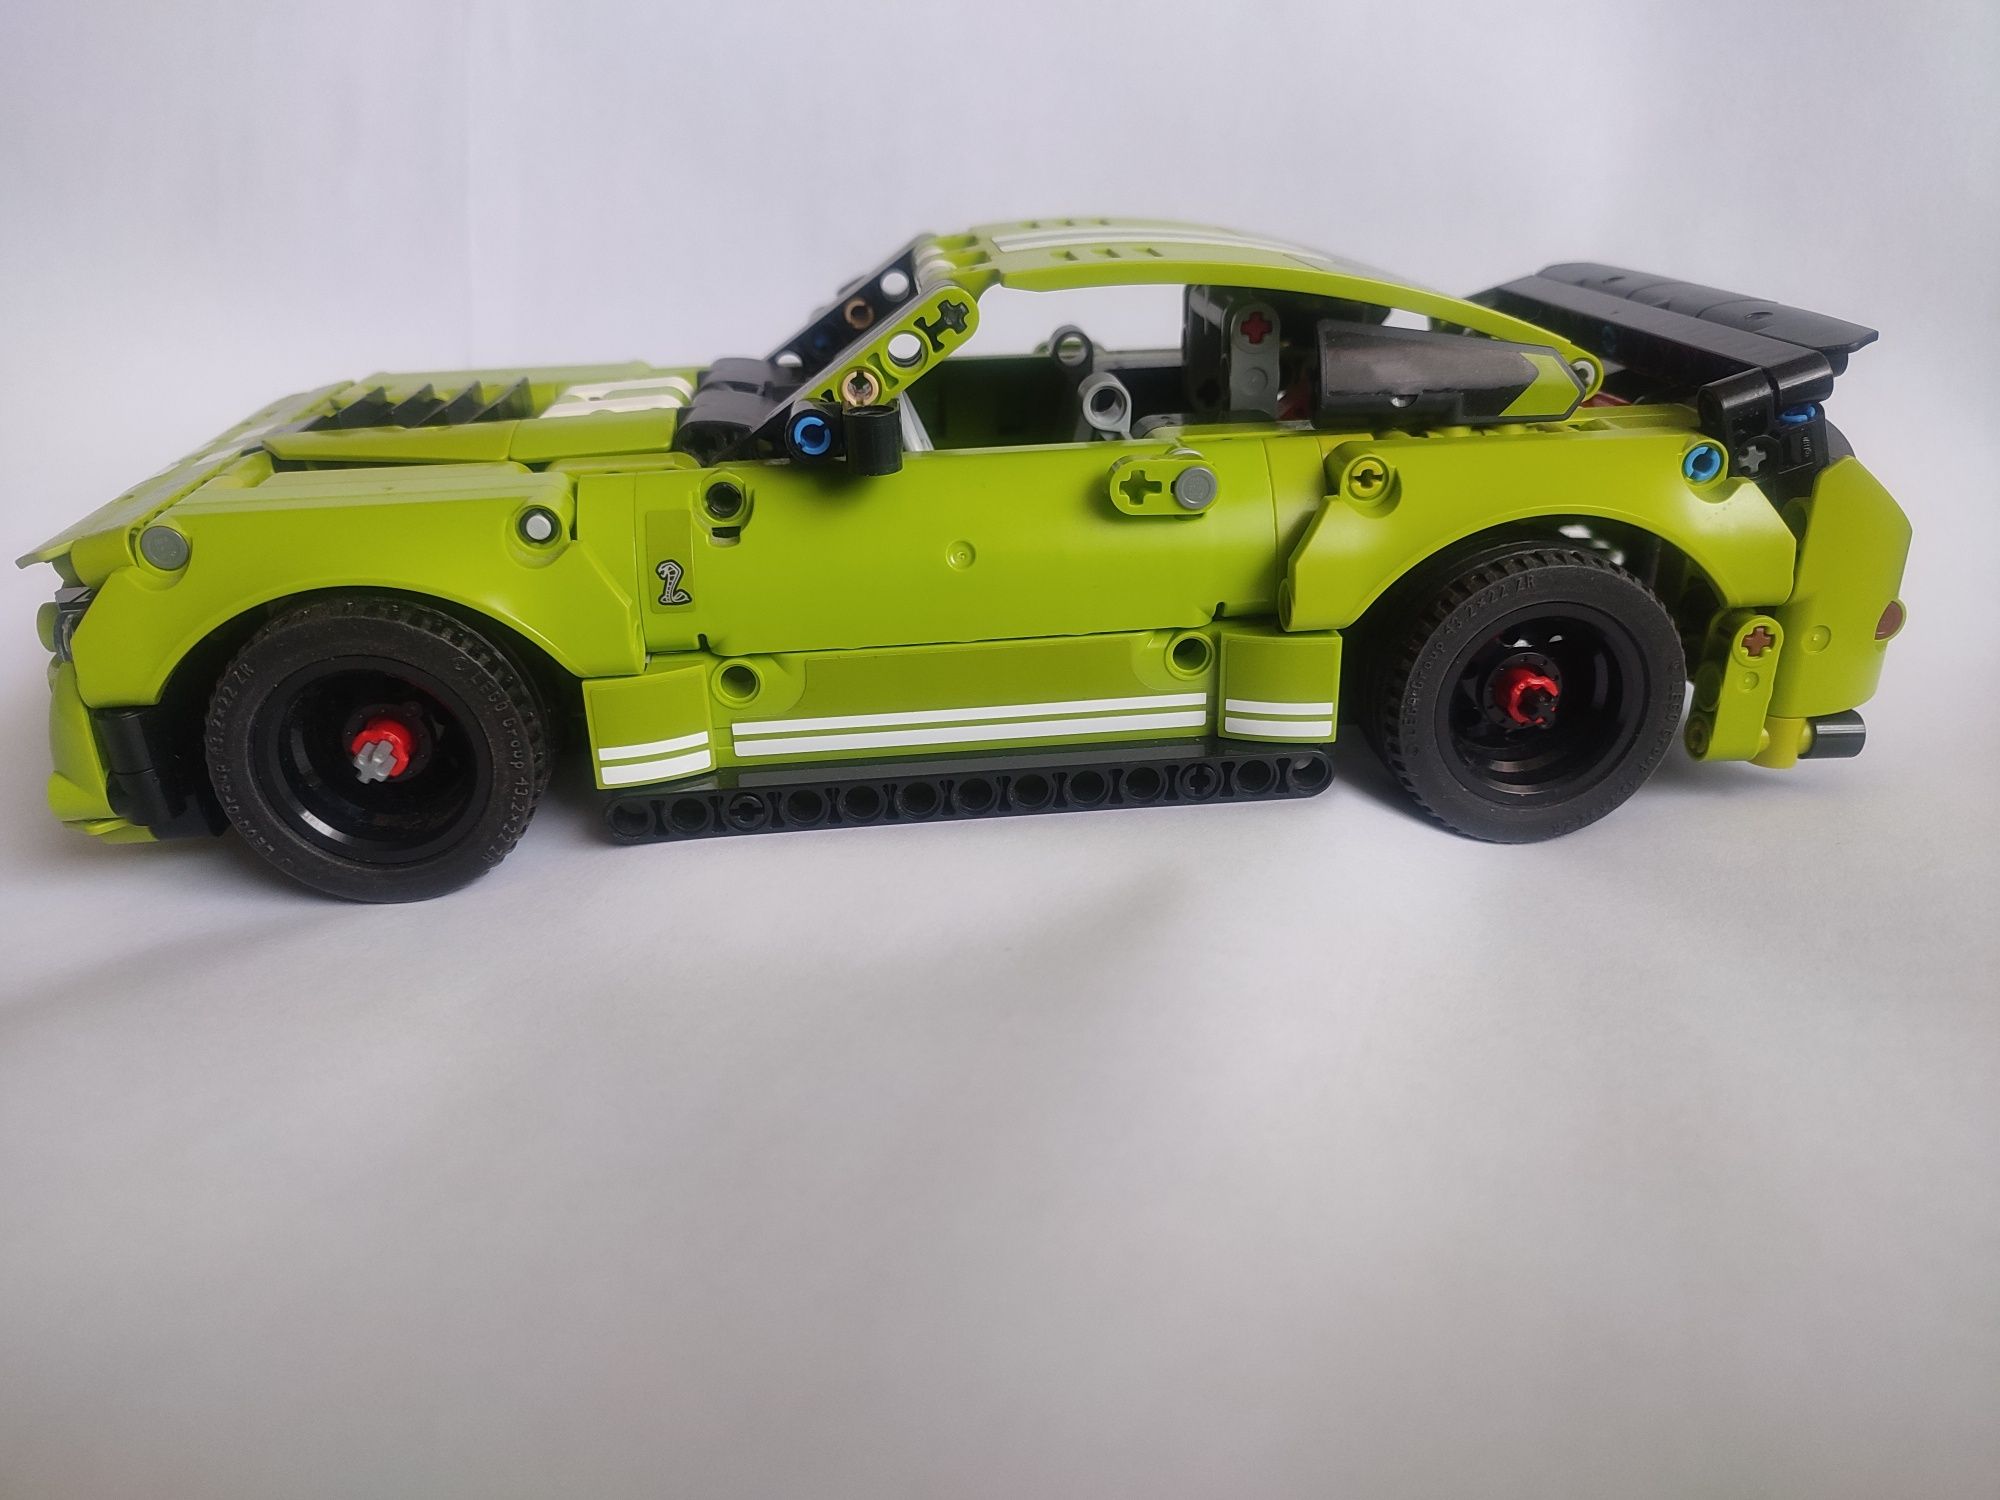 LEGO technic 42138 Shelby GT500